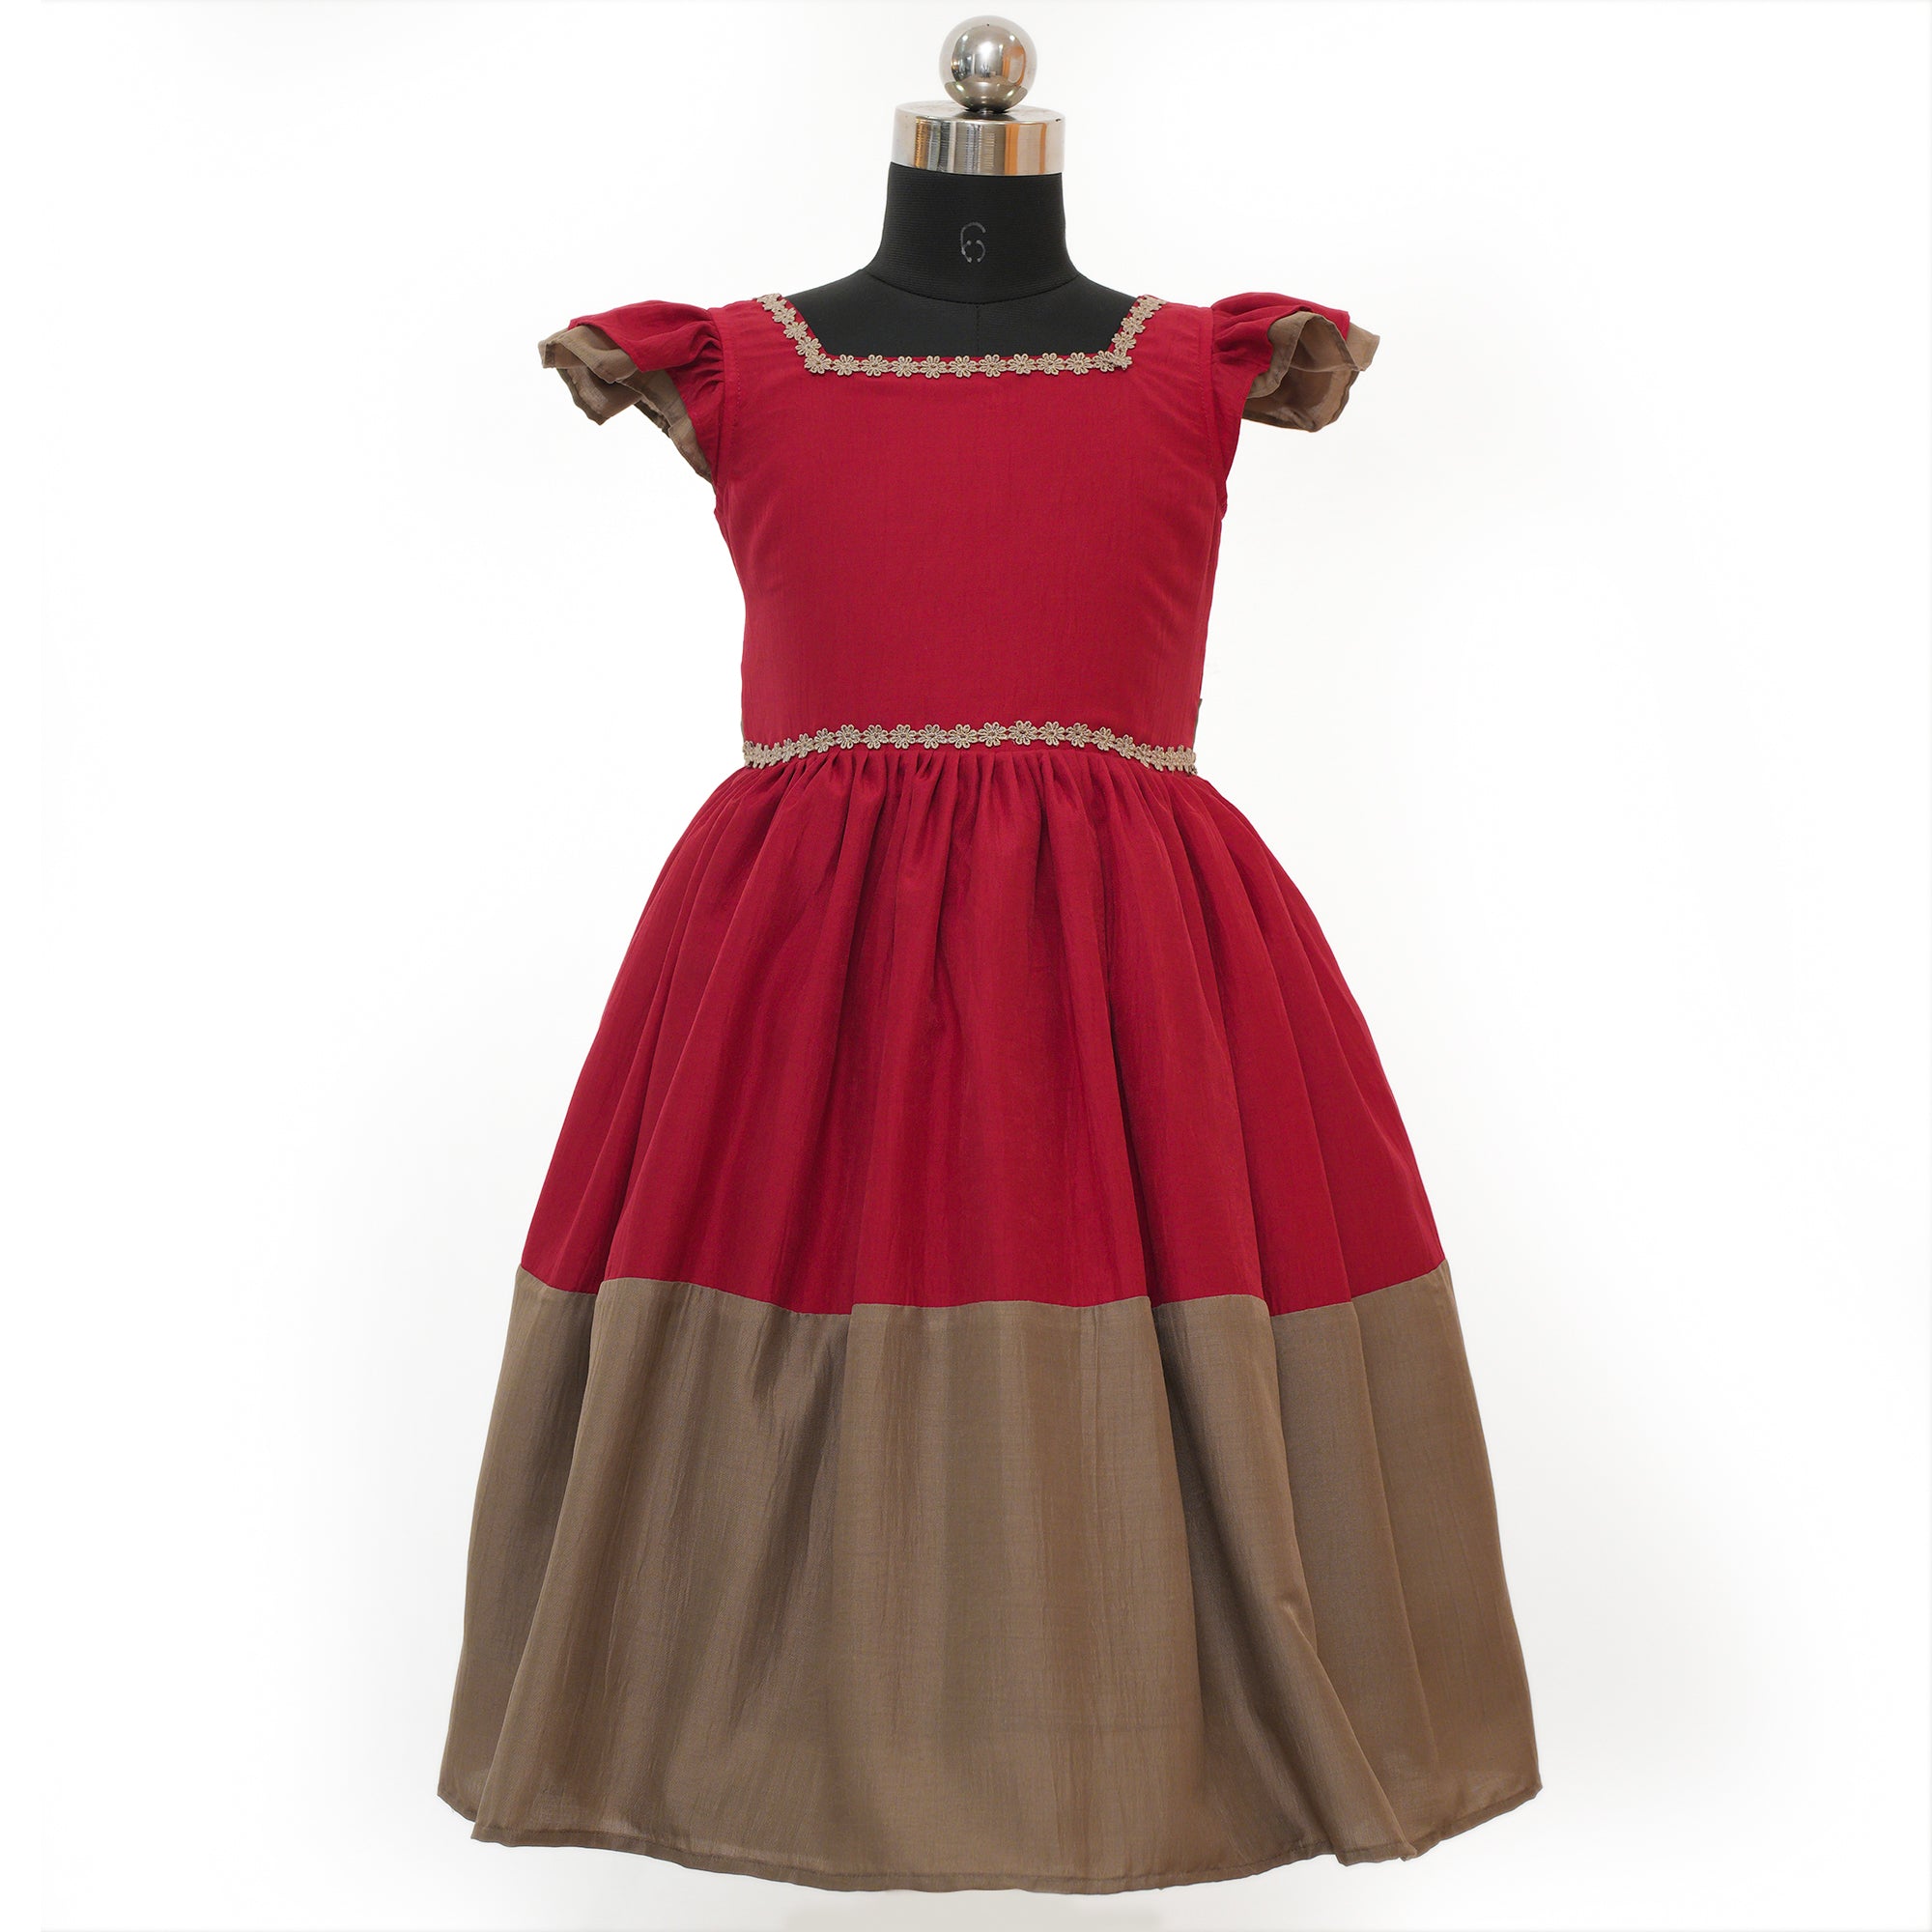 HEYKIDOO Kids Girls Party Dress Customised Frock-Red & Beige